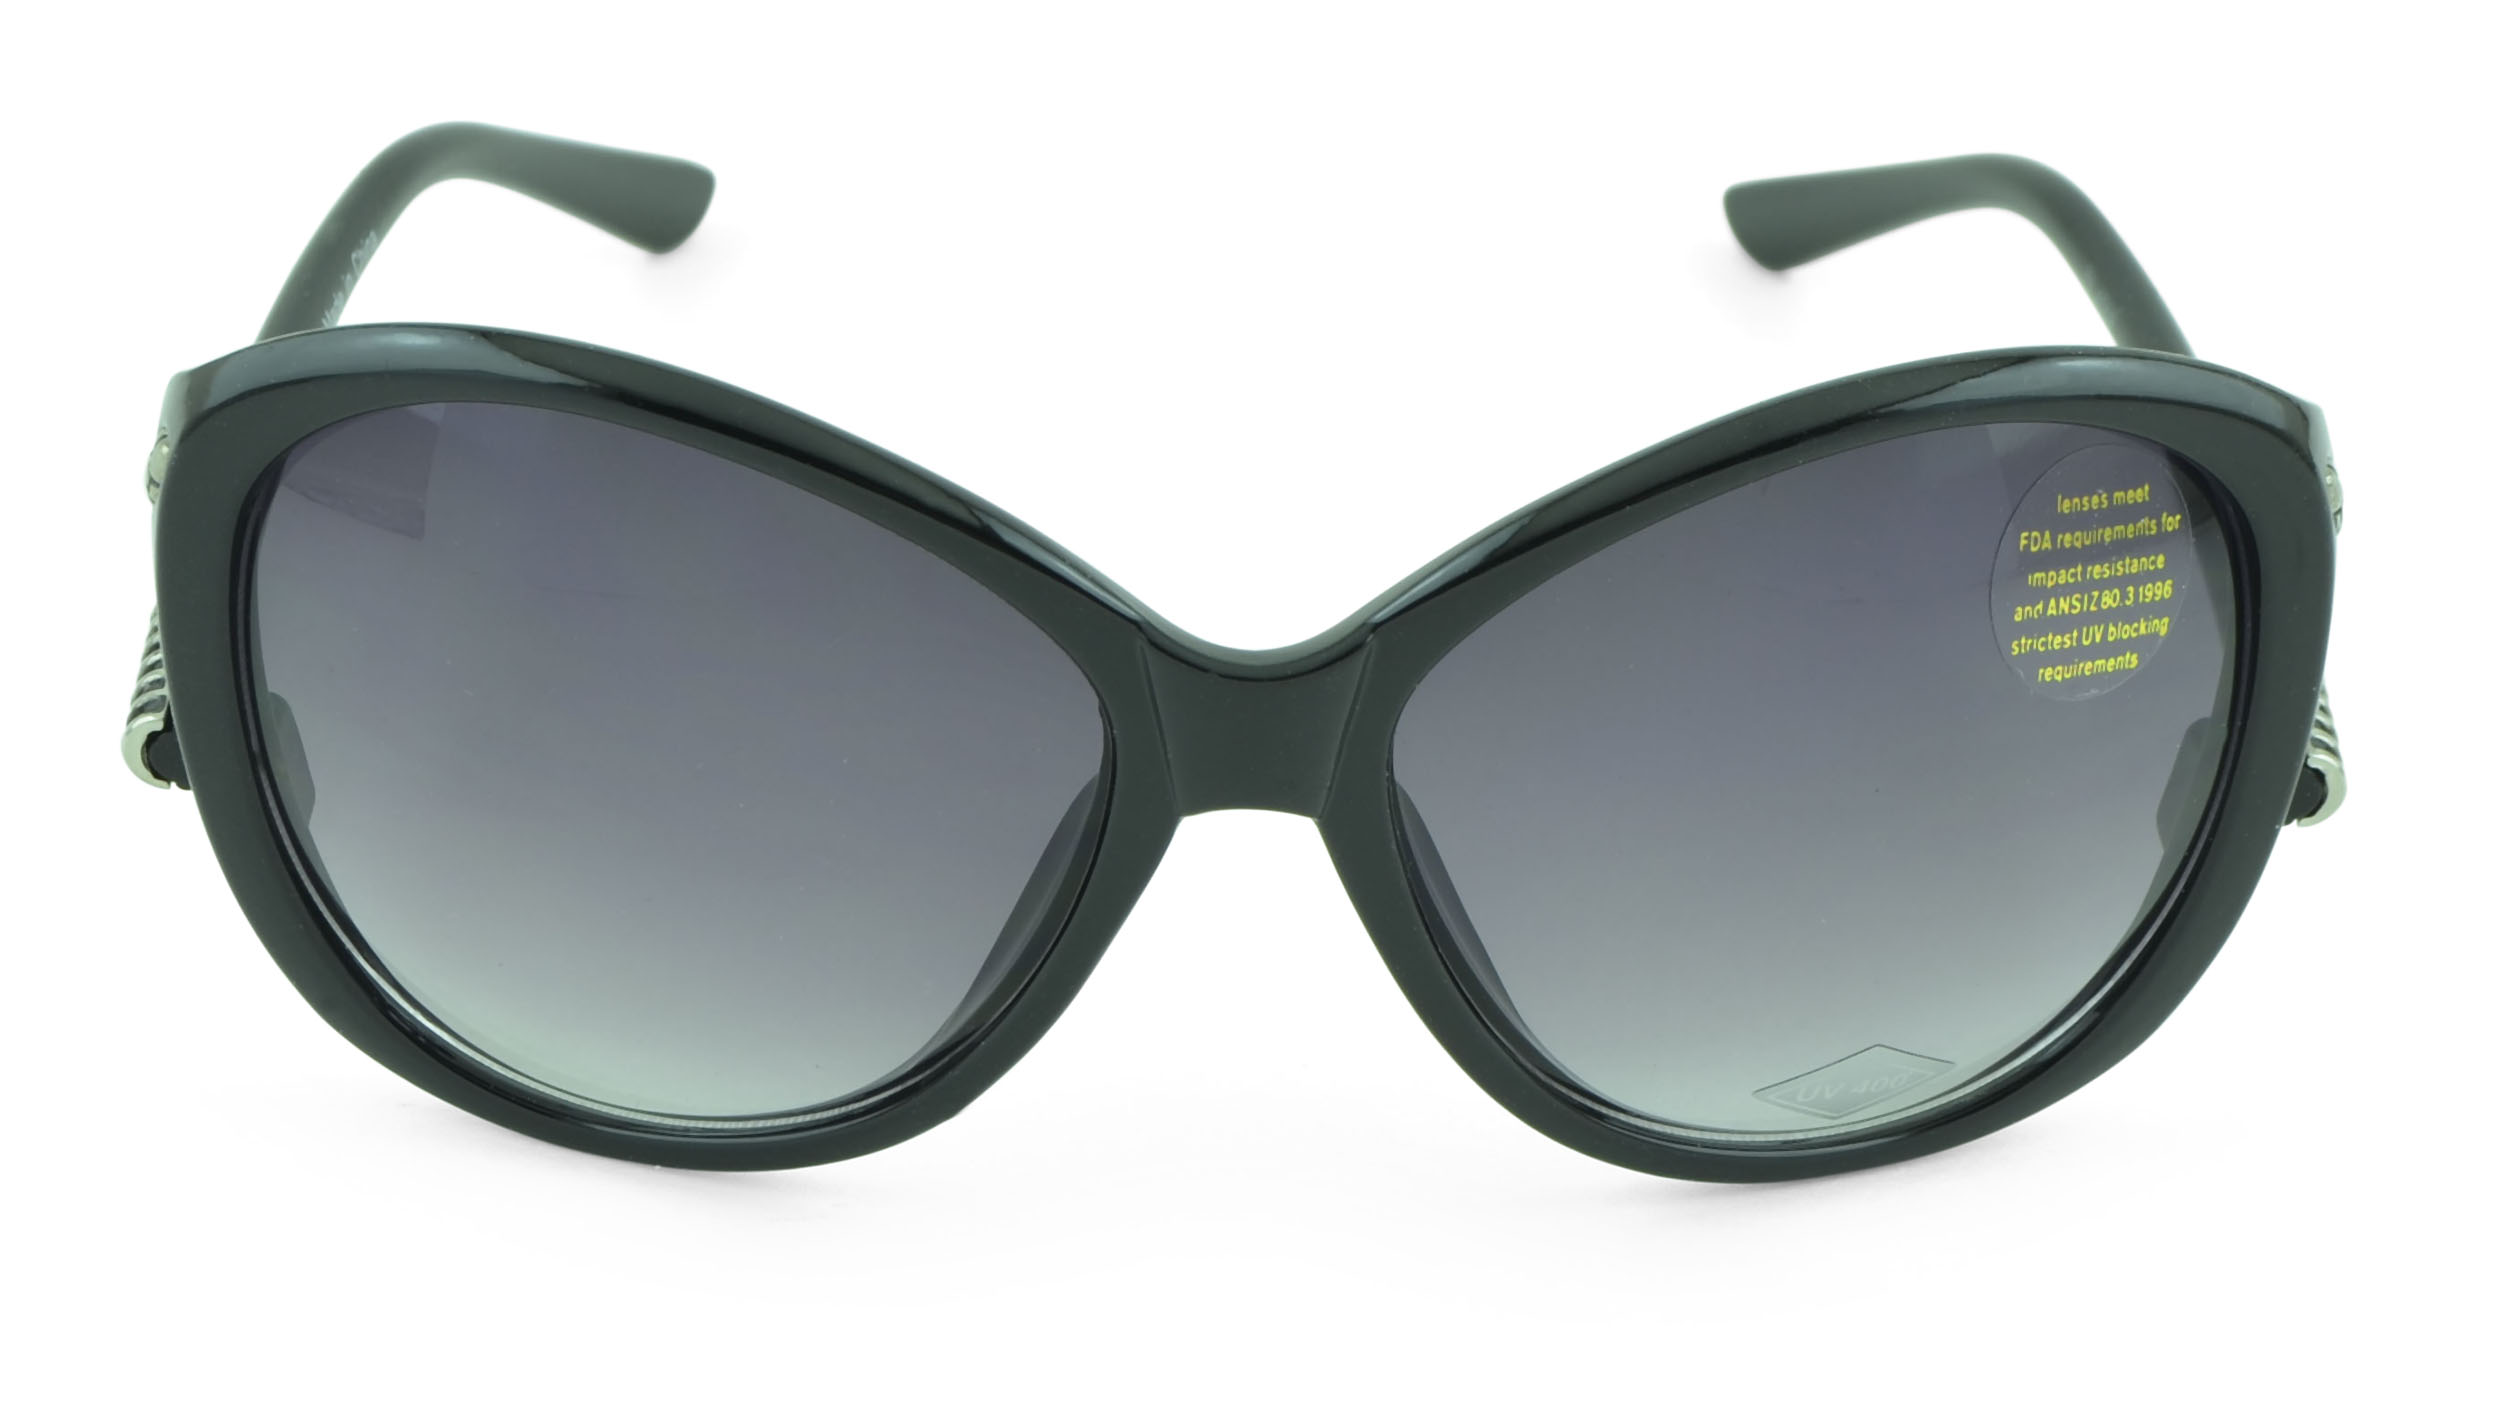 Belle Donne- Oversize Large Women's Fashion Celebrity Sunglasses - Oversized Sunglasses for Women and Girls - Trendy Ladies Sunglasses - UV Protection